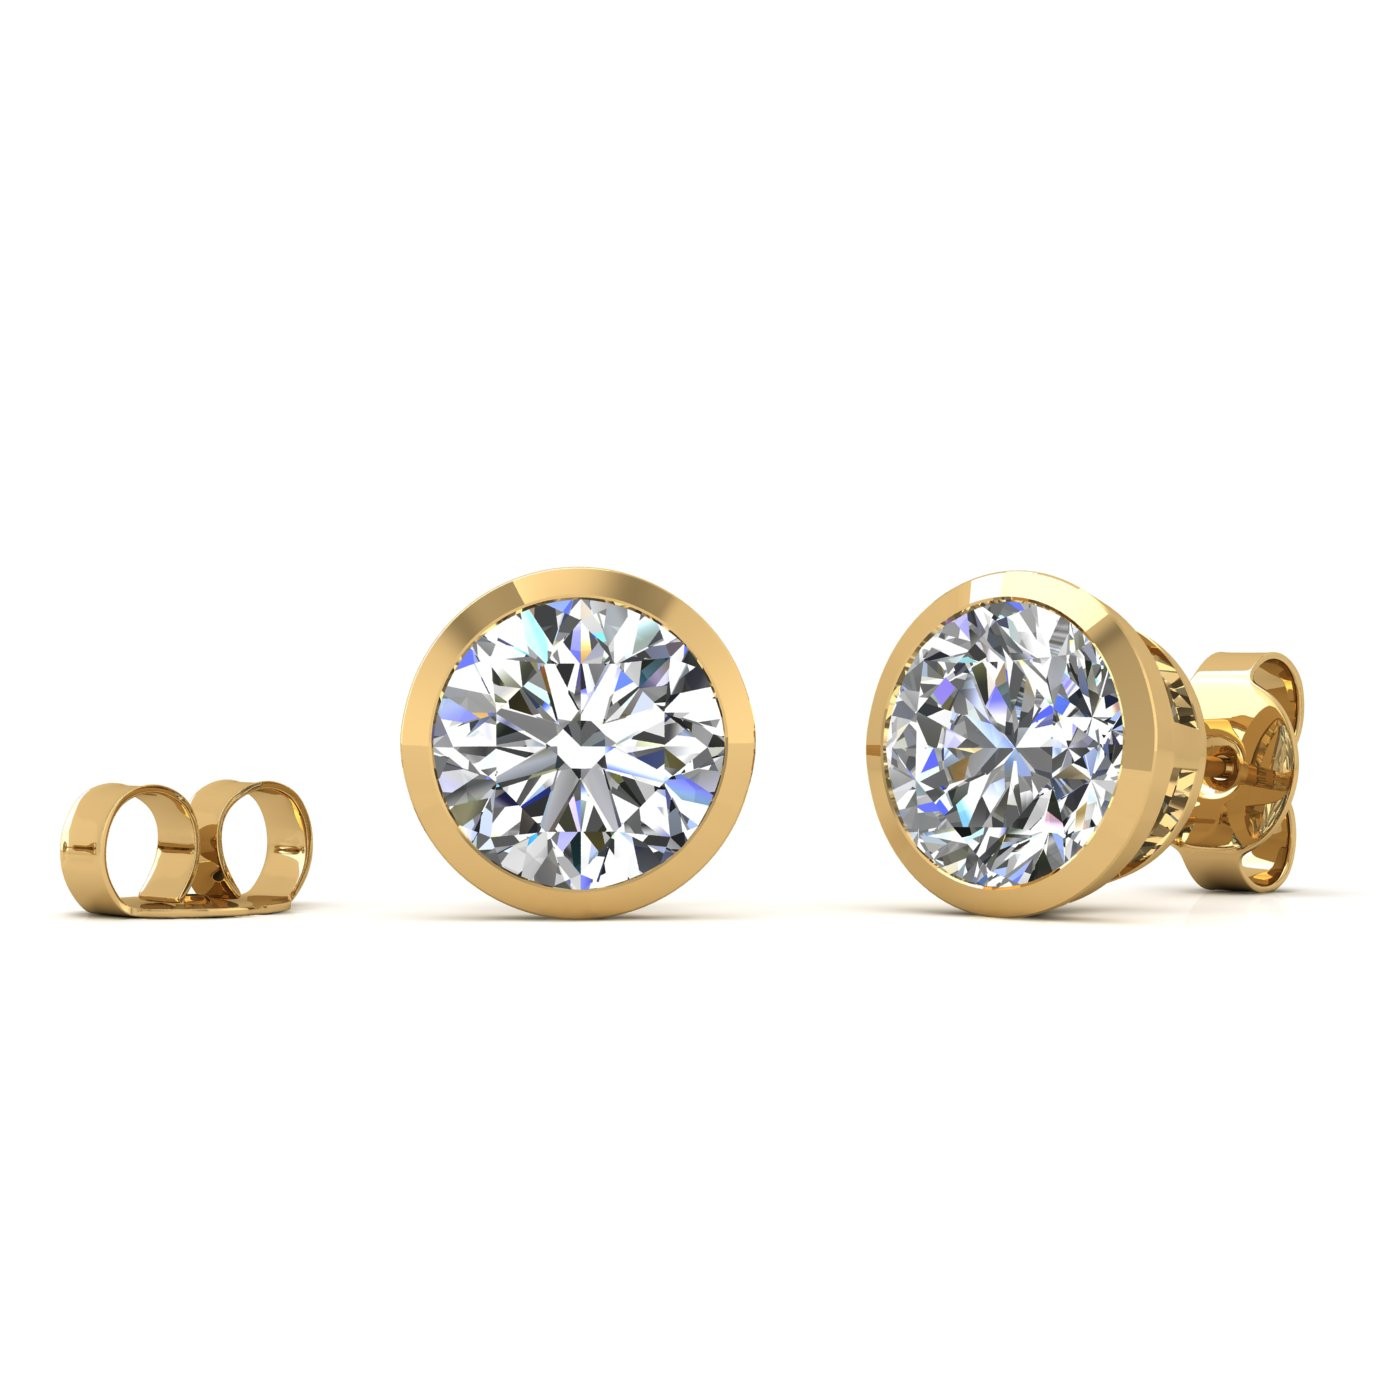 18k yellow gold 0,7 ct each (1,4 tcw) round brilliant cut diamond bezel set earring studs Photos & images